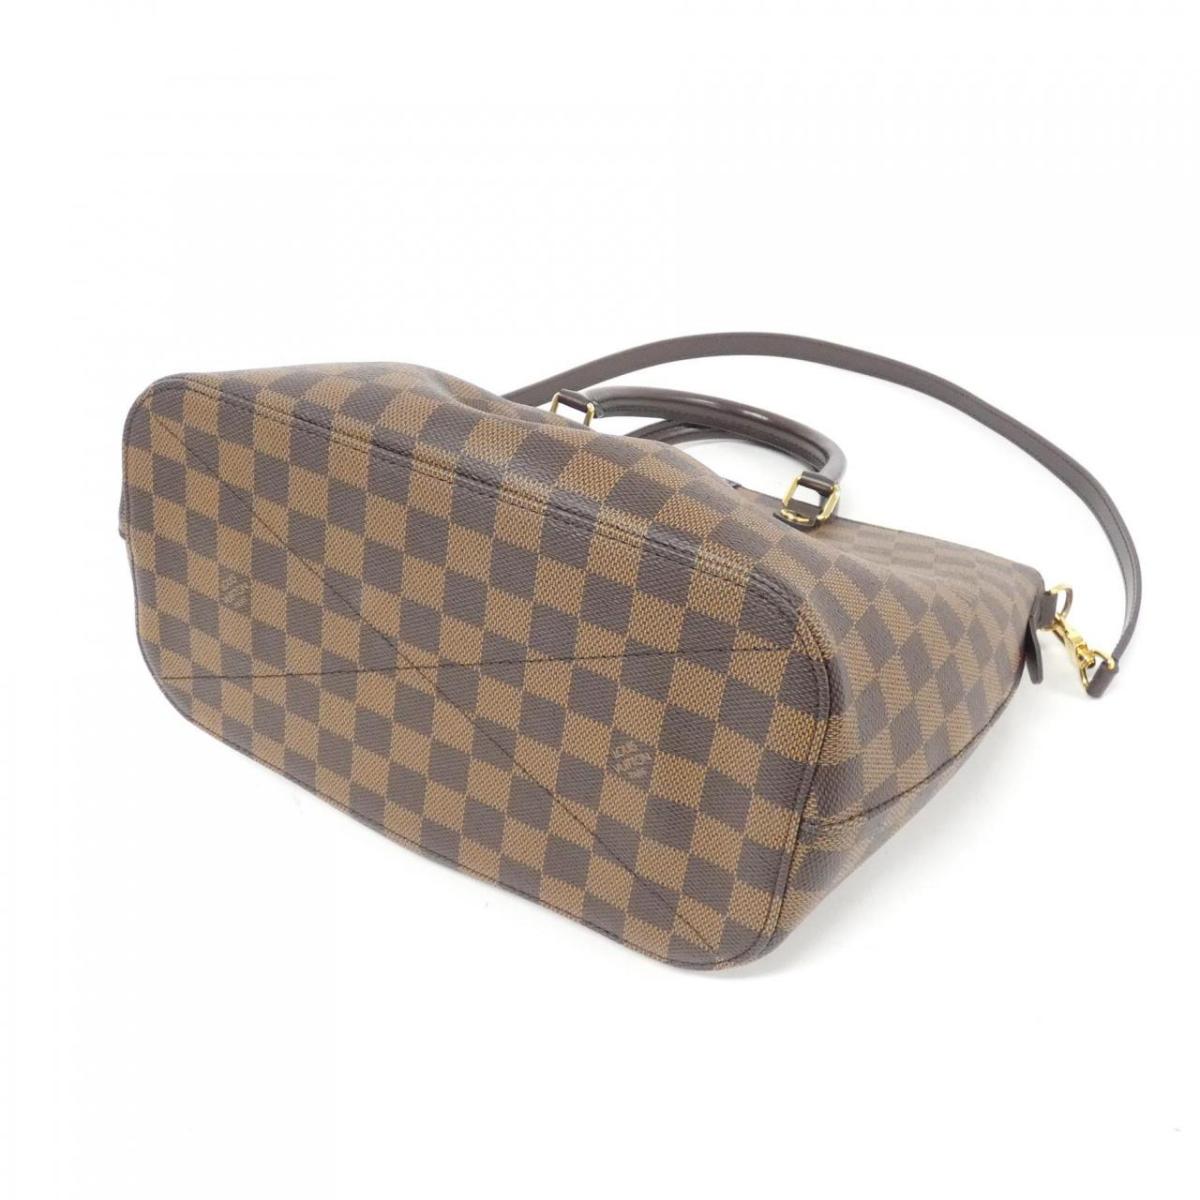 Louis Vuitton Damier Siena MM N41546 Bag